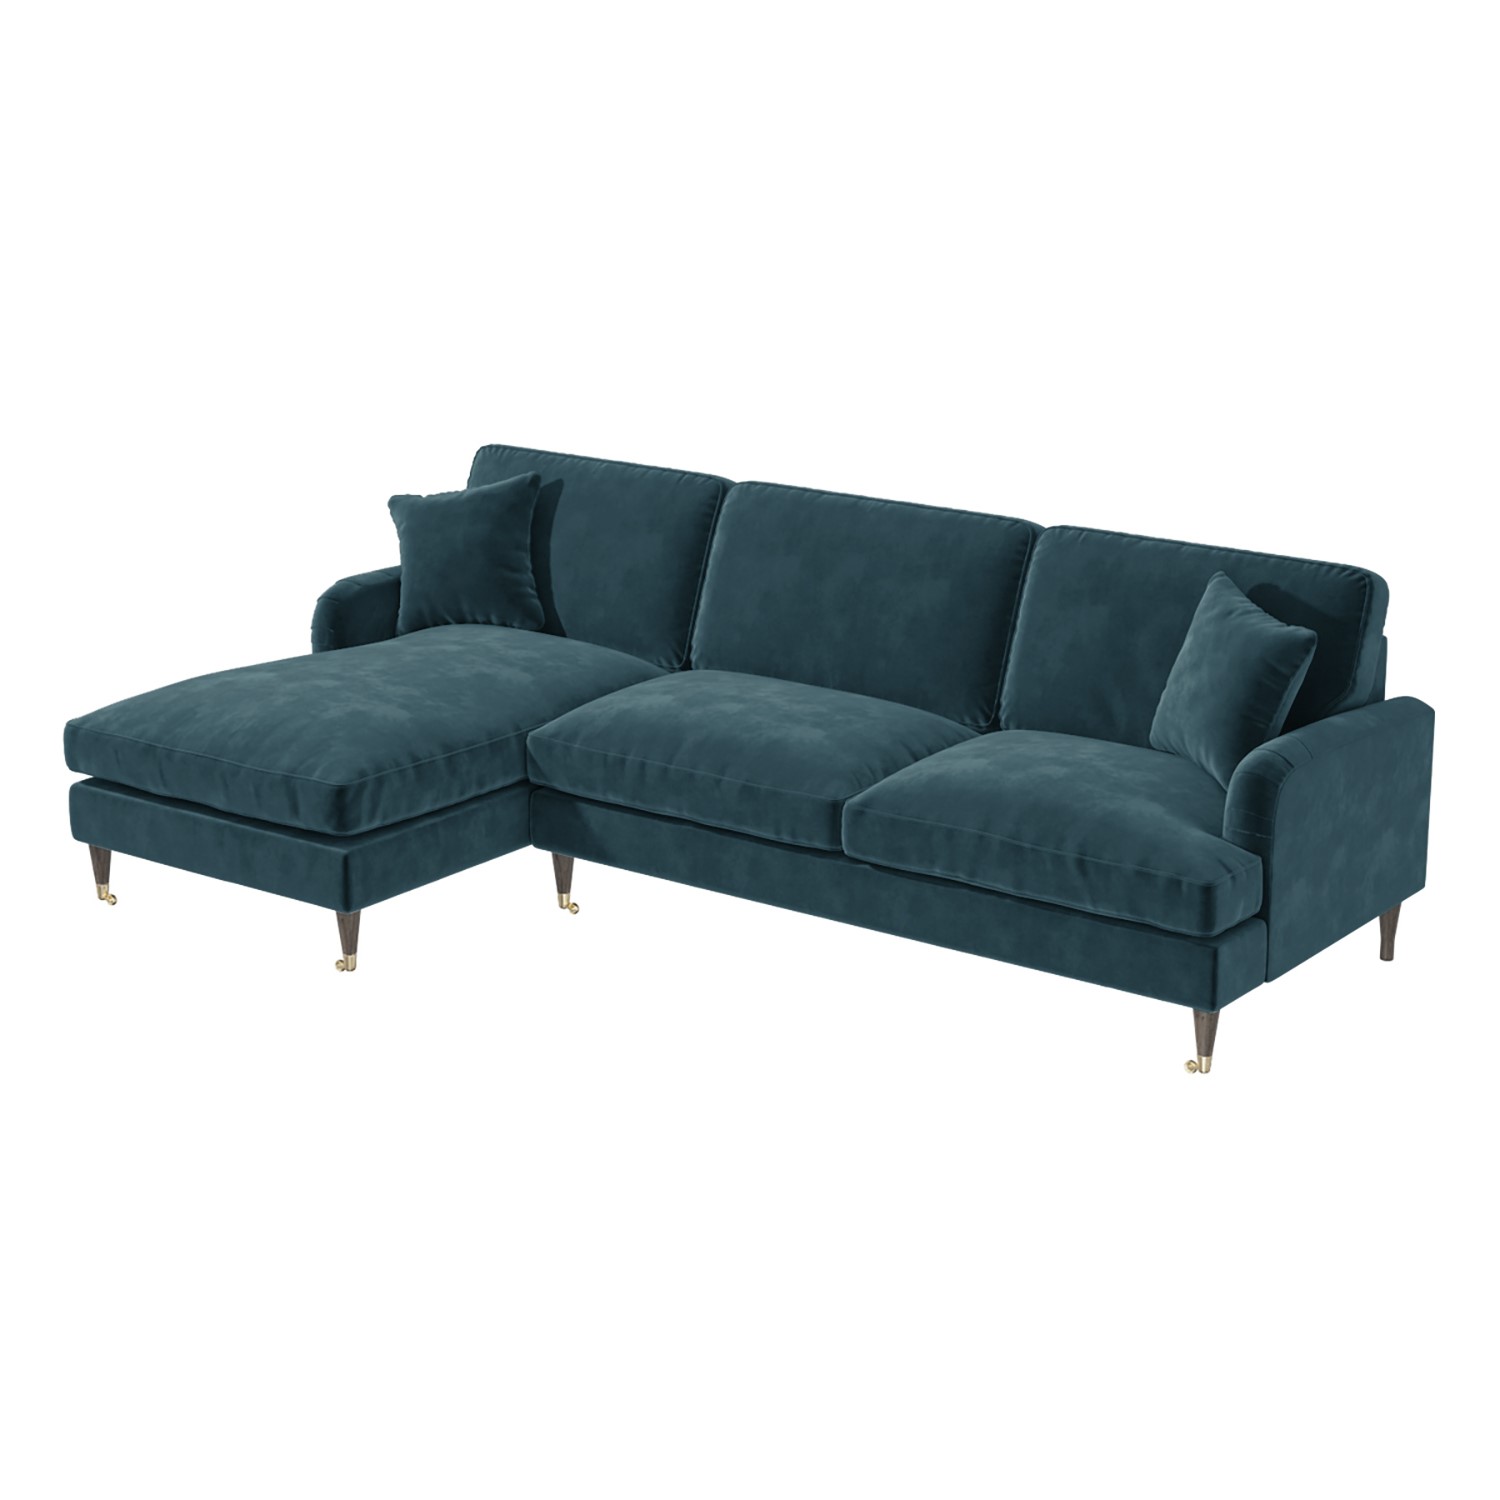 Read more about Blue velvet left hand facing l shaped sofa seats 4 payton